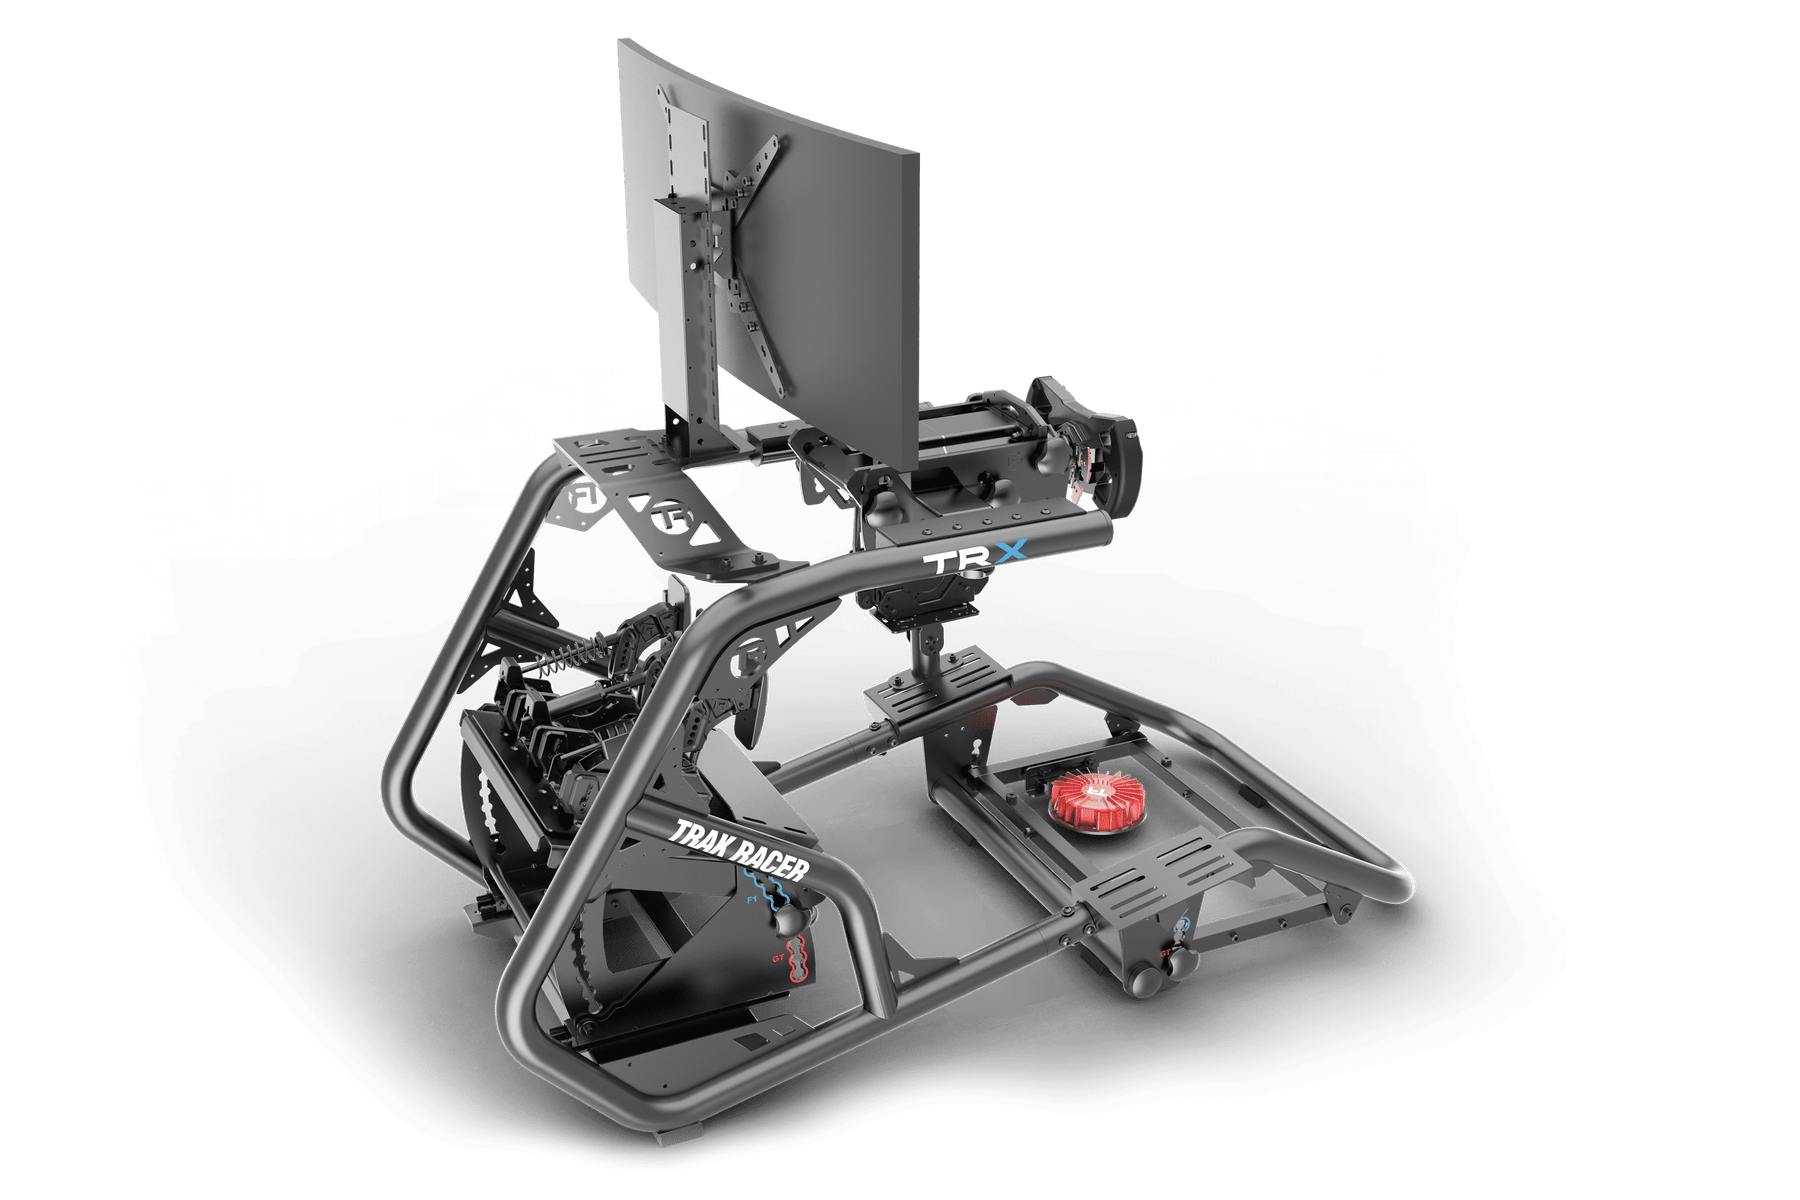 Universal Bass Shaker/Tactile Transducer Sim Rig Mount – Trak Racer